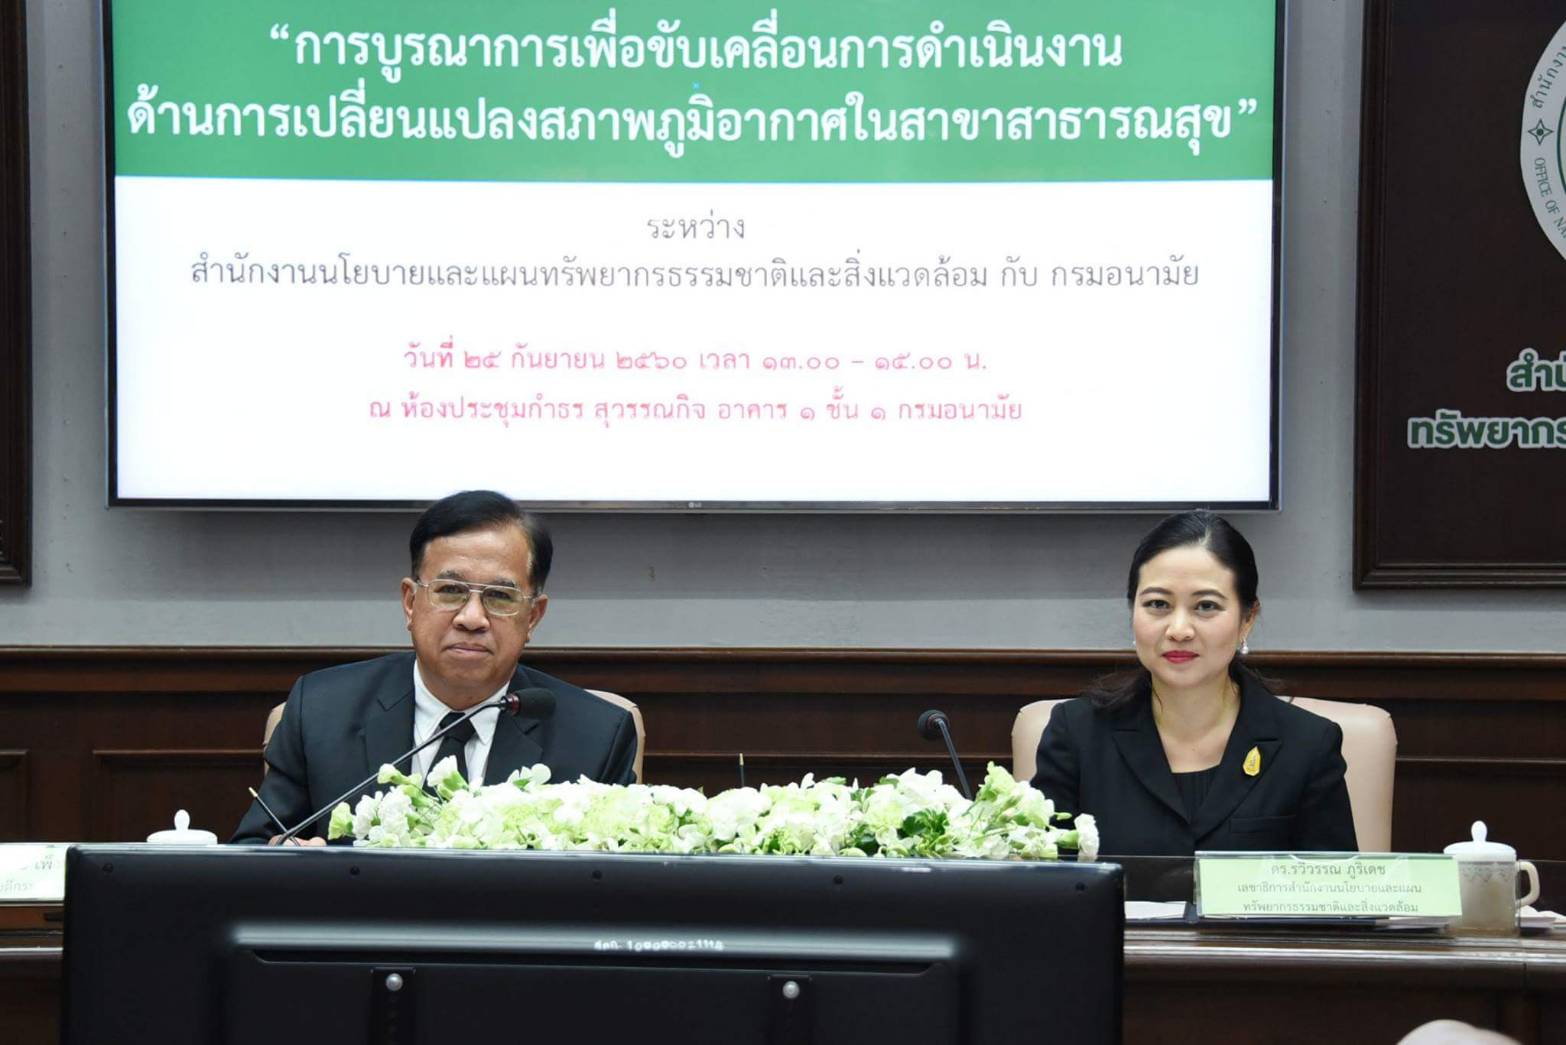 An MoU to advance Thailand’s National Adaptation Plan (NAP) process